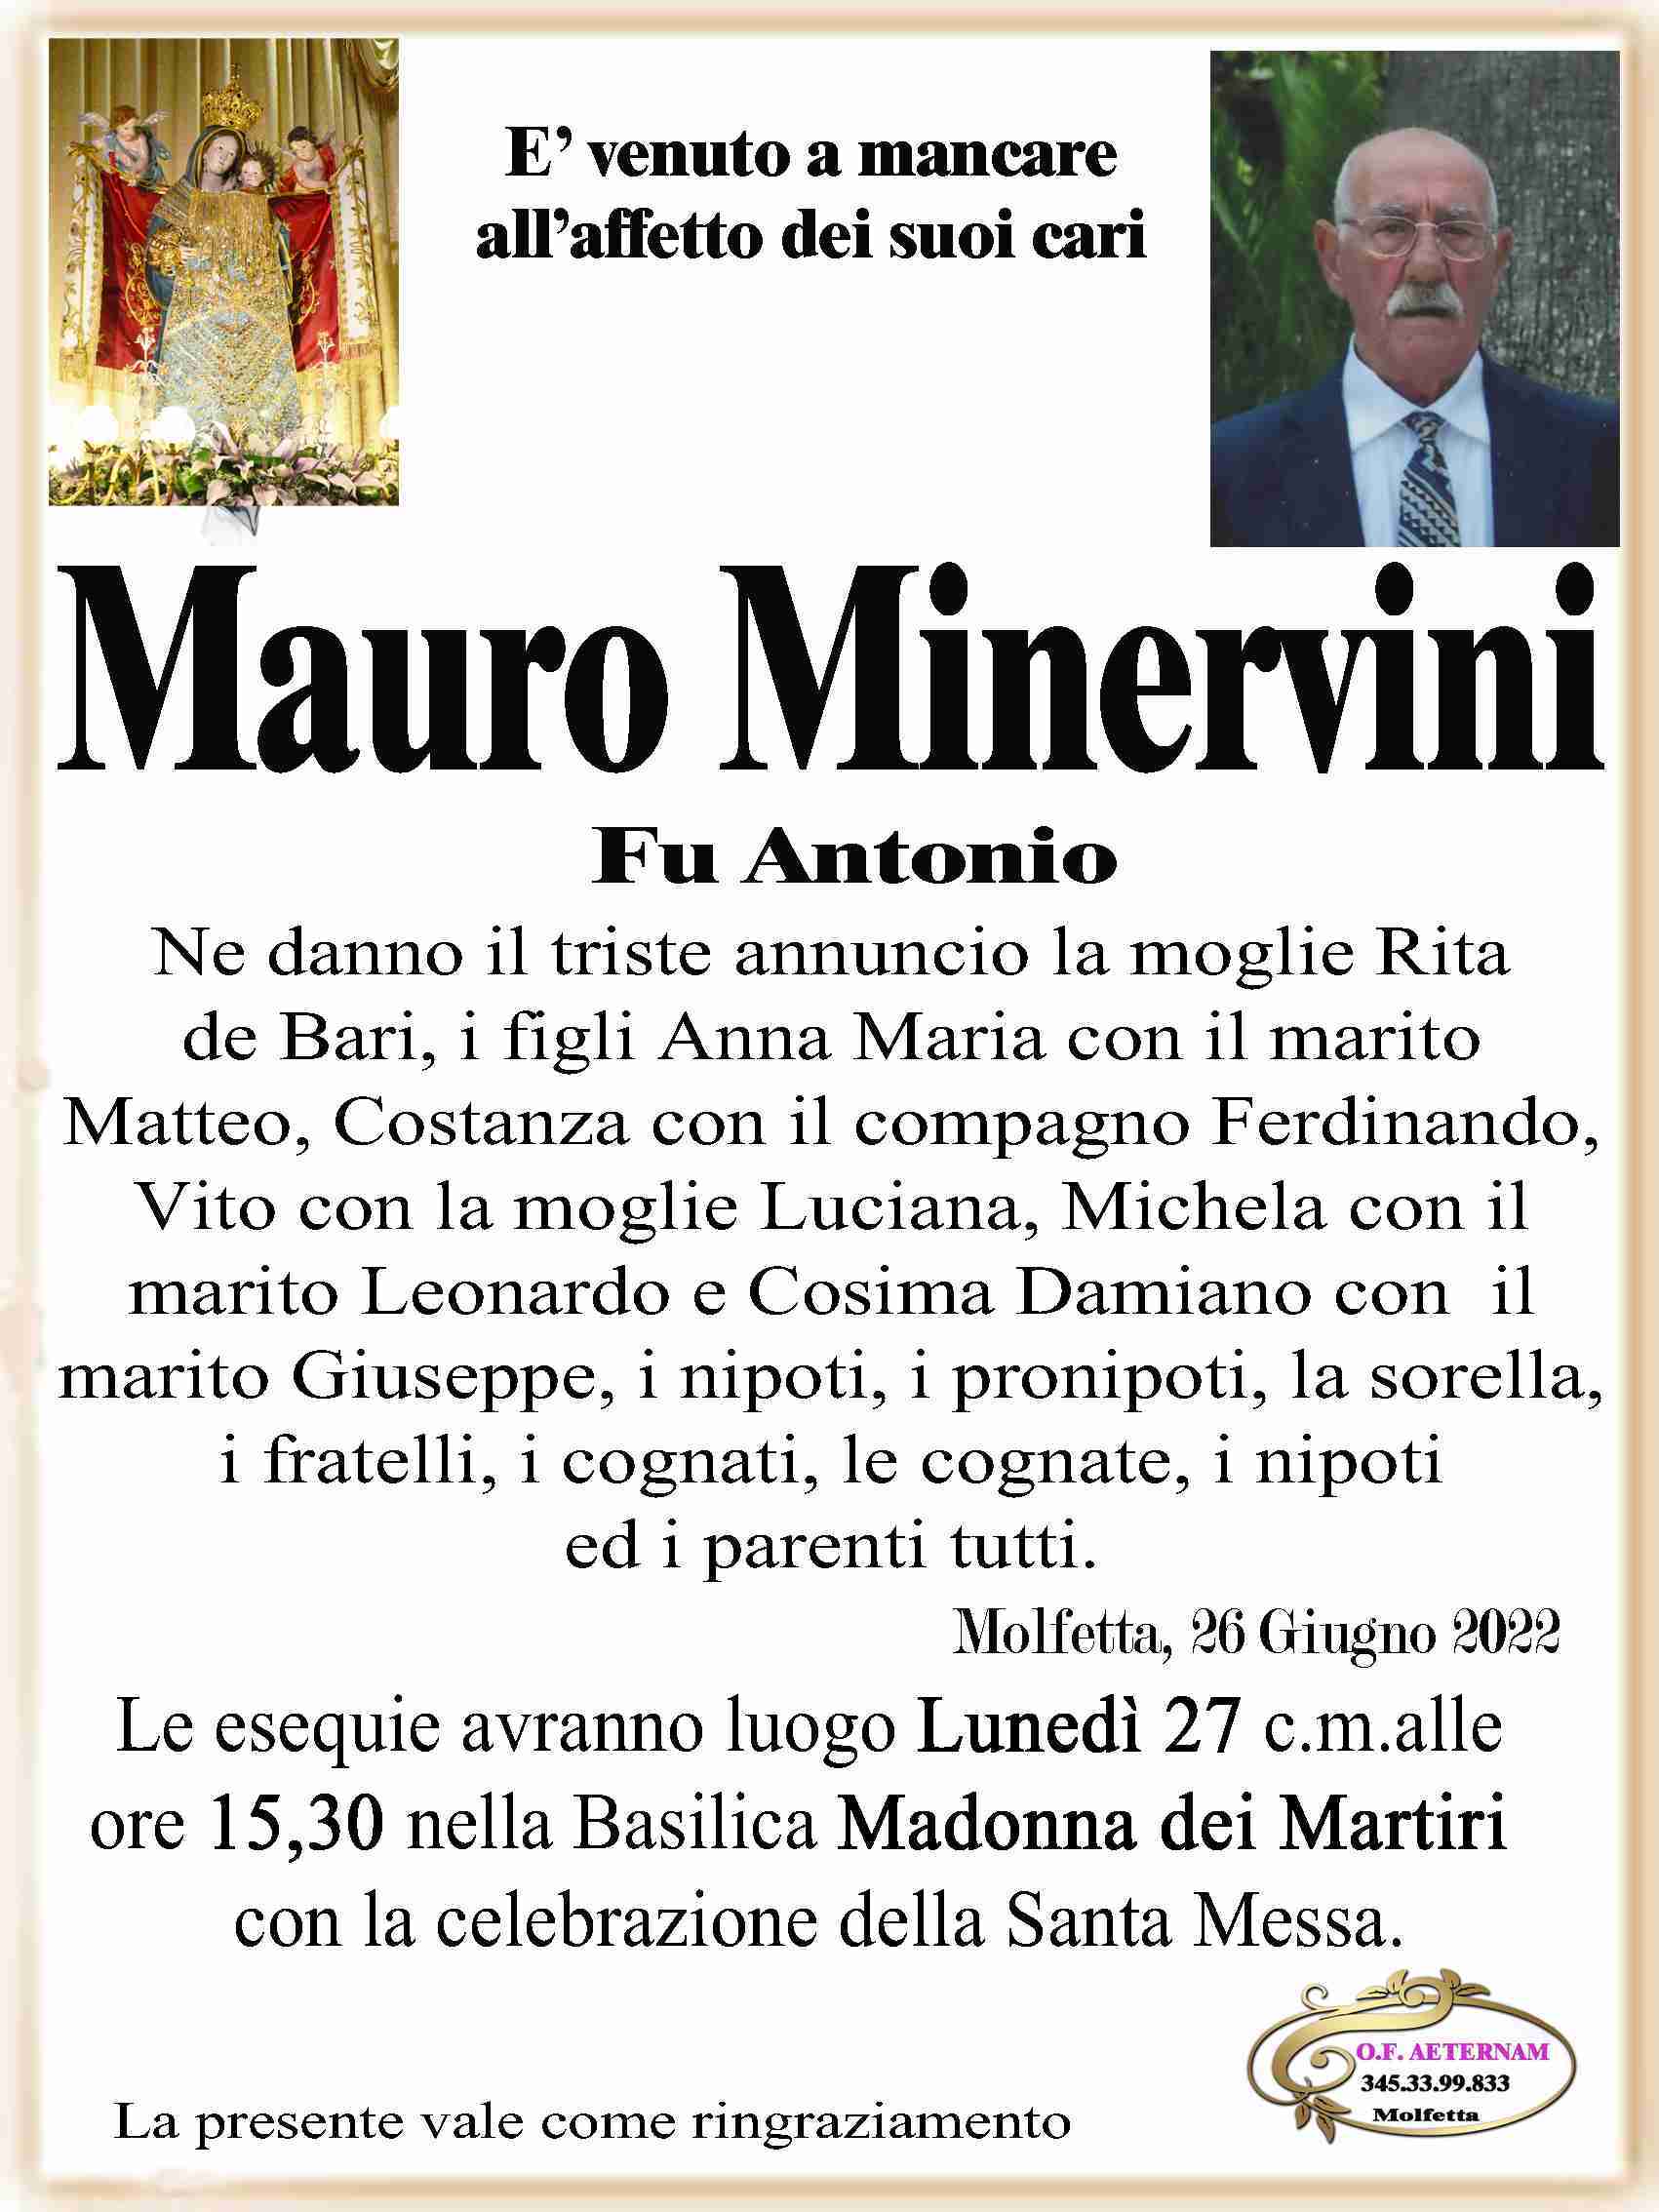 Mauro Minervini